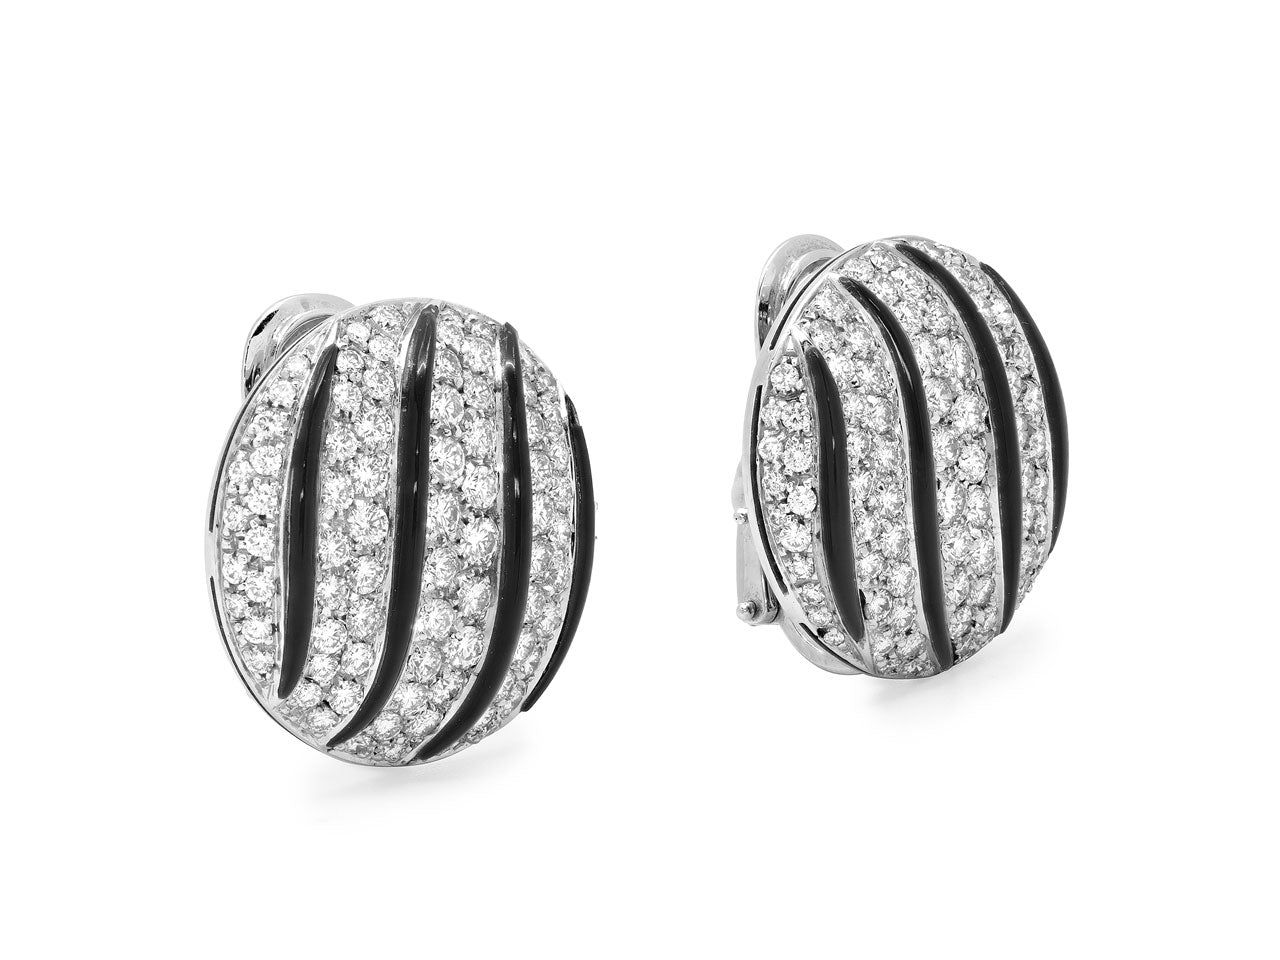 Diamond and Onyx Earrings in 18K White Gold